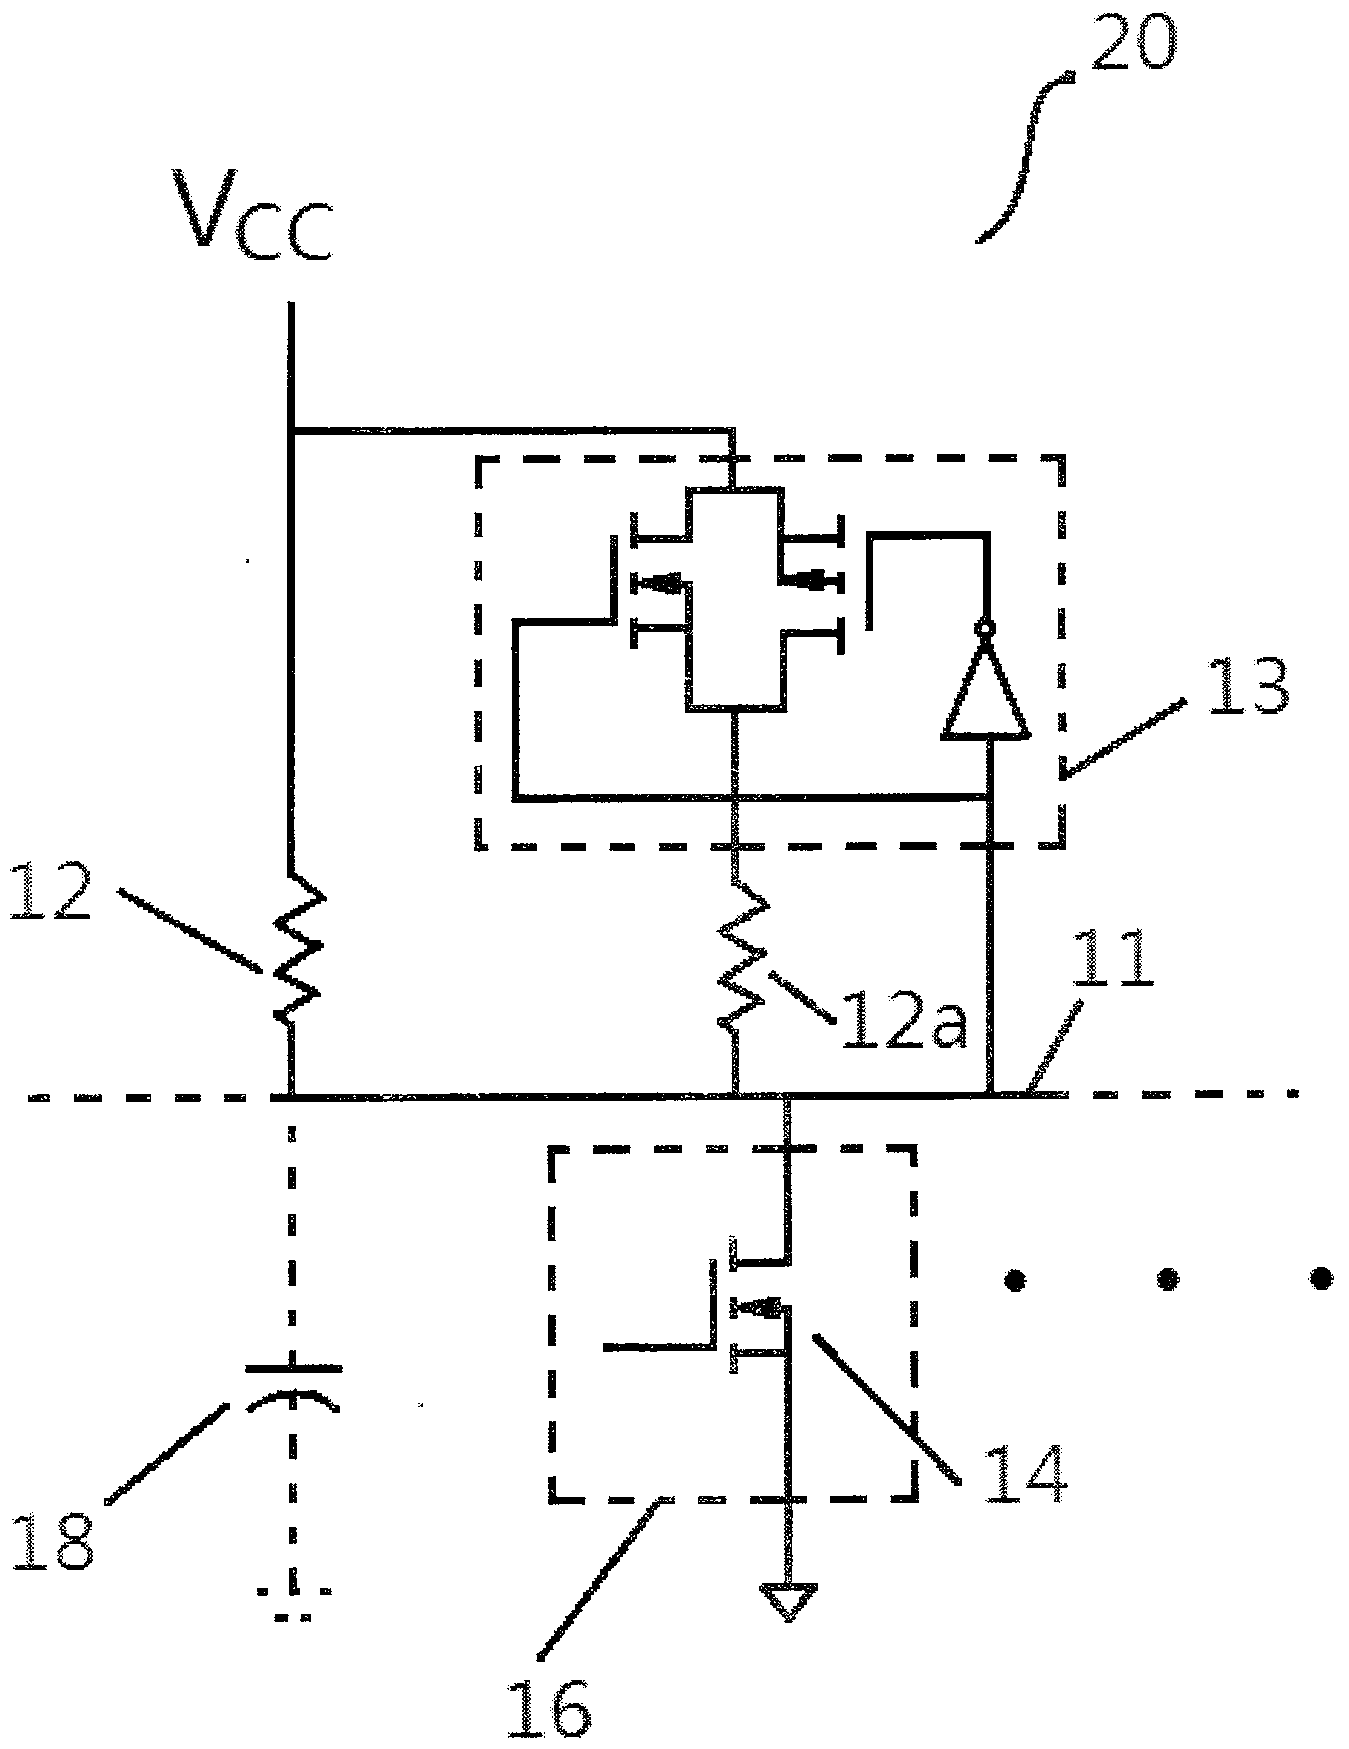 Active upward-pulling circuit of drain electrode open circuit signal